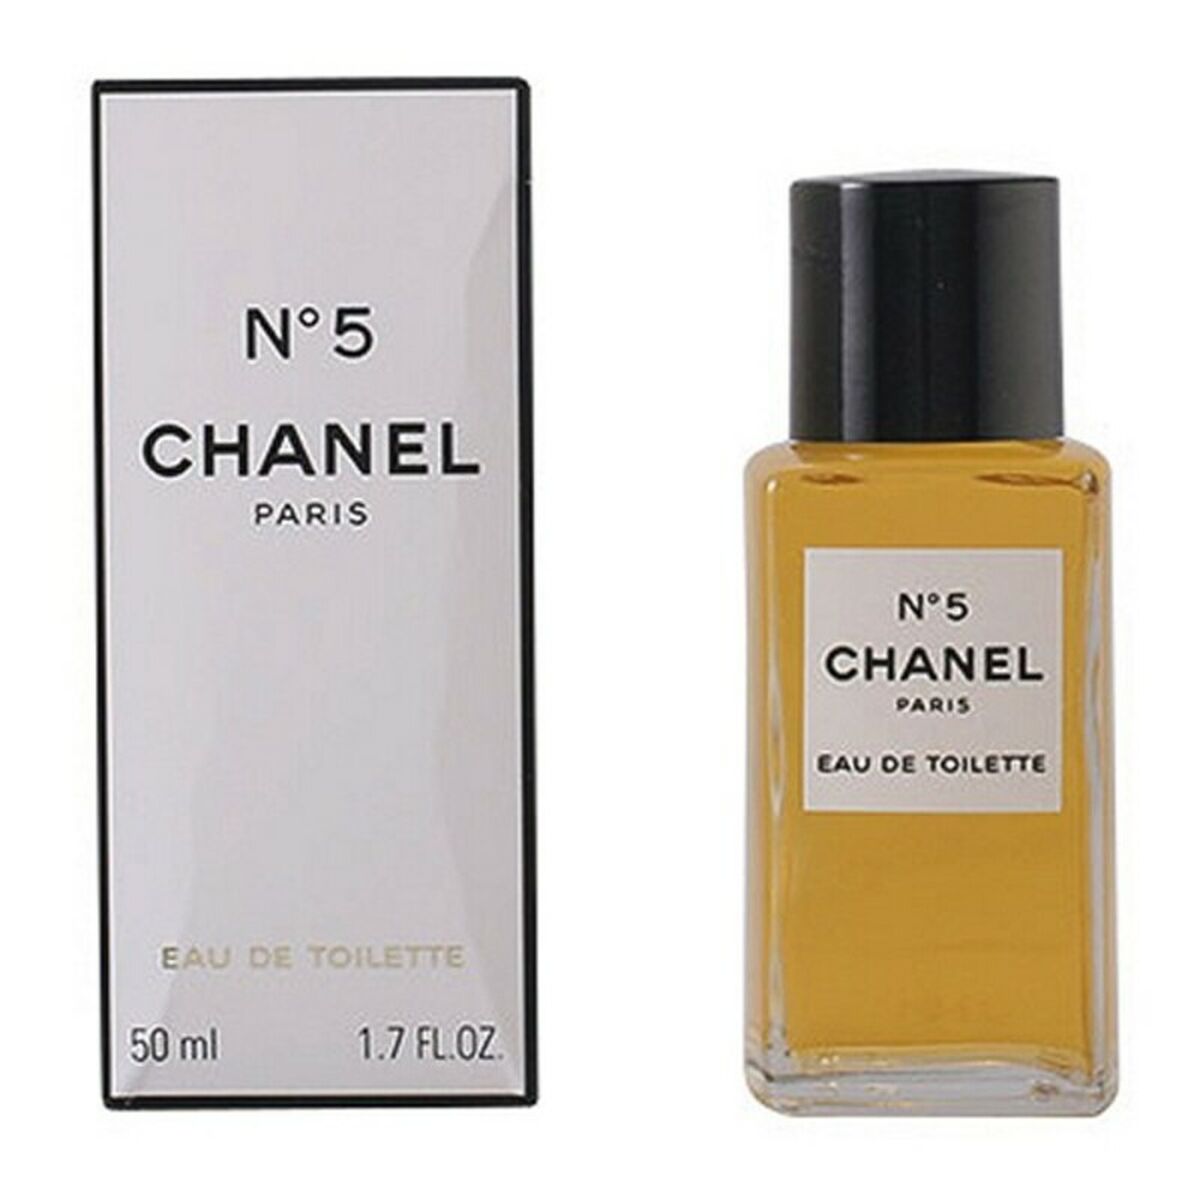 Kaufe Damenparfum Nº 5 Chanel EDT bei AWK Flagship um € 121.00